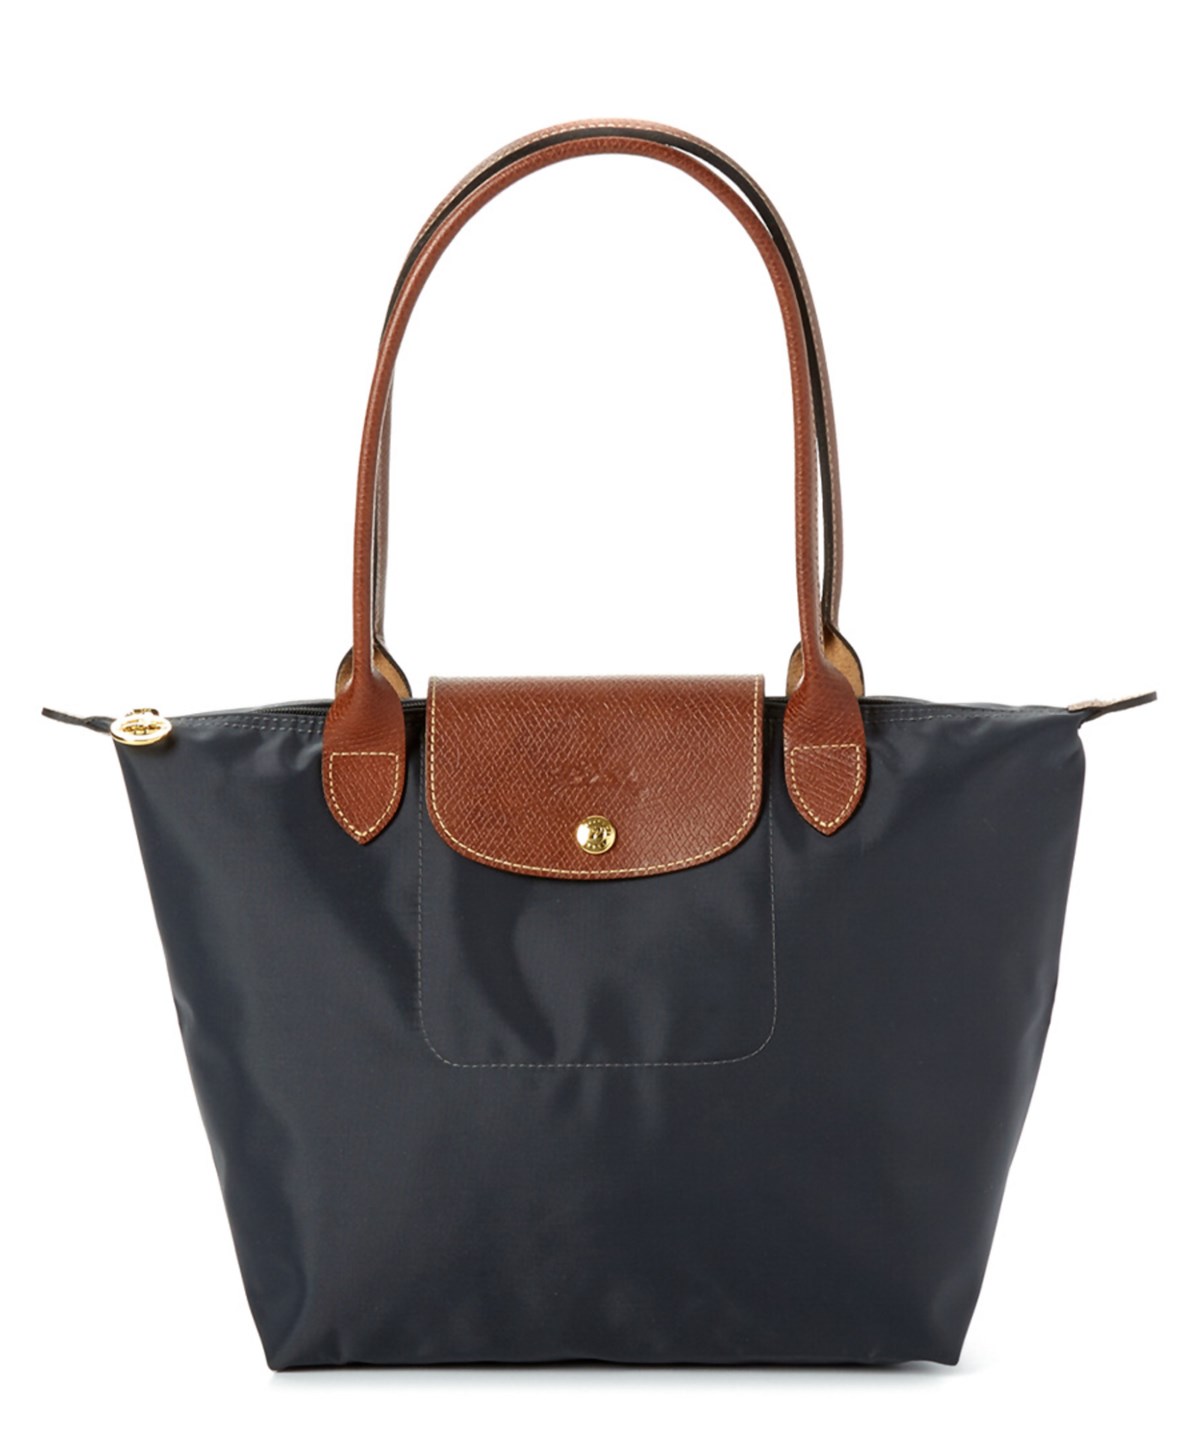 Longchamp small tote bag